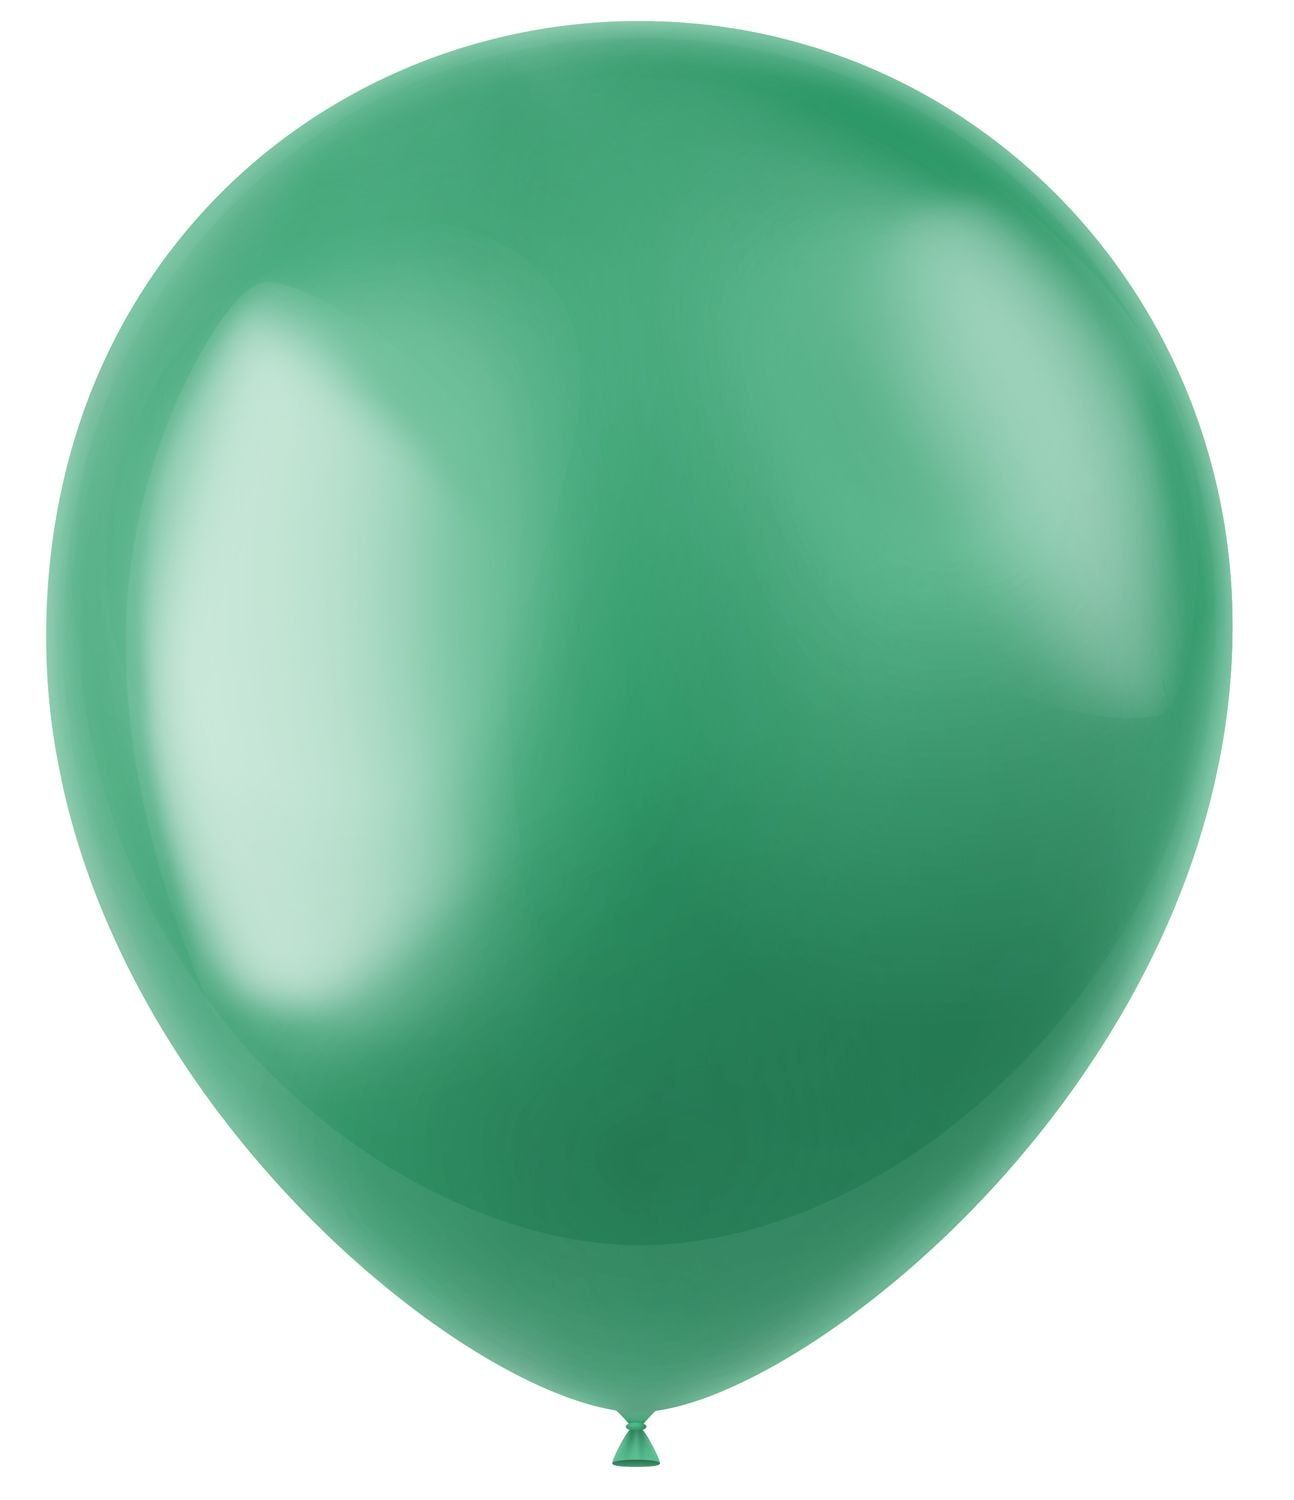 Regal groene metallic ballonnen 100 stuks